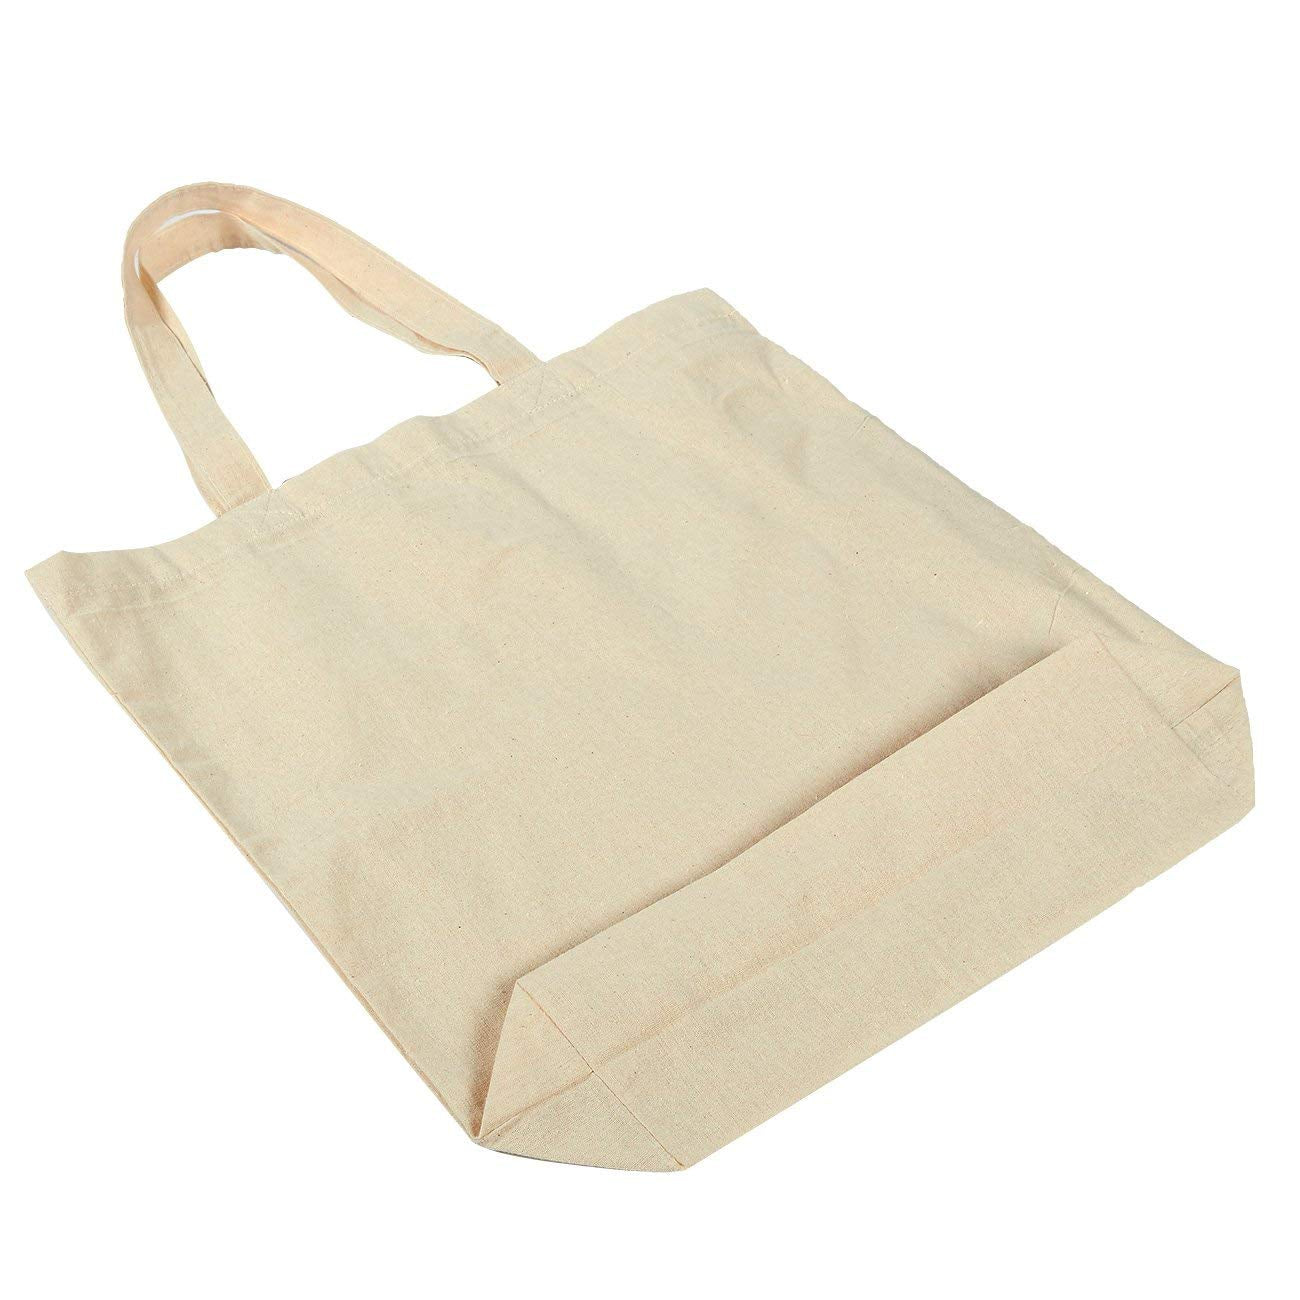 wholesale-cotton-tote-bags, %100 cotton totes, cheap cotton totes